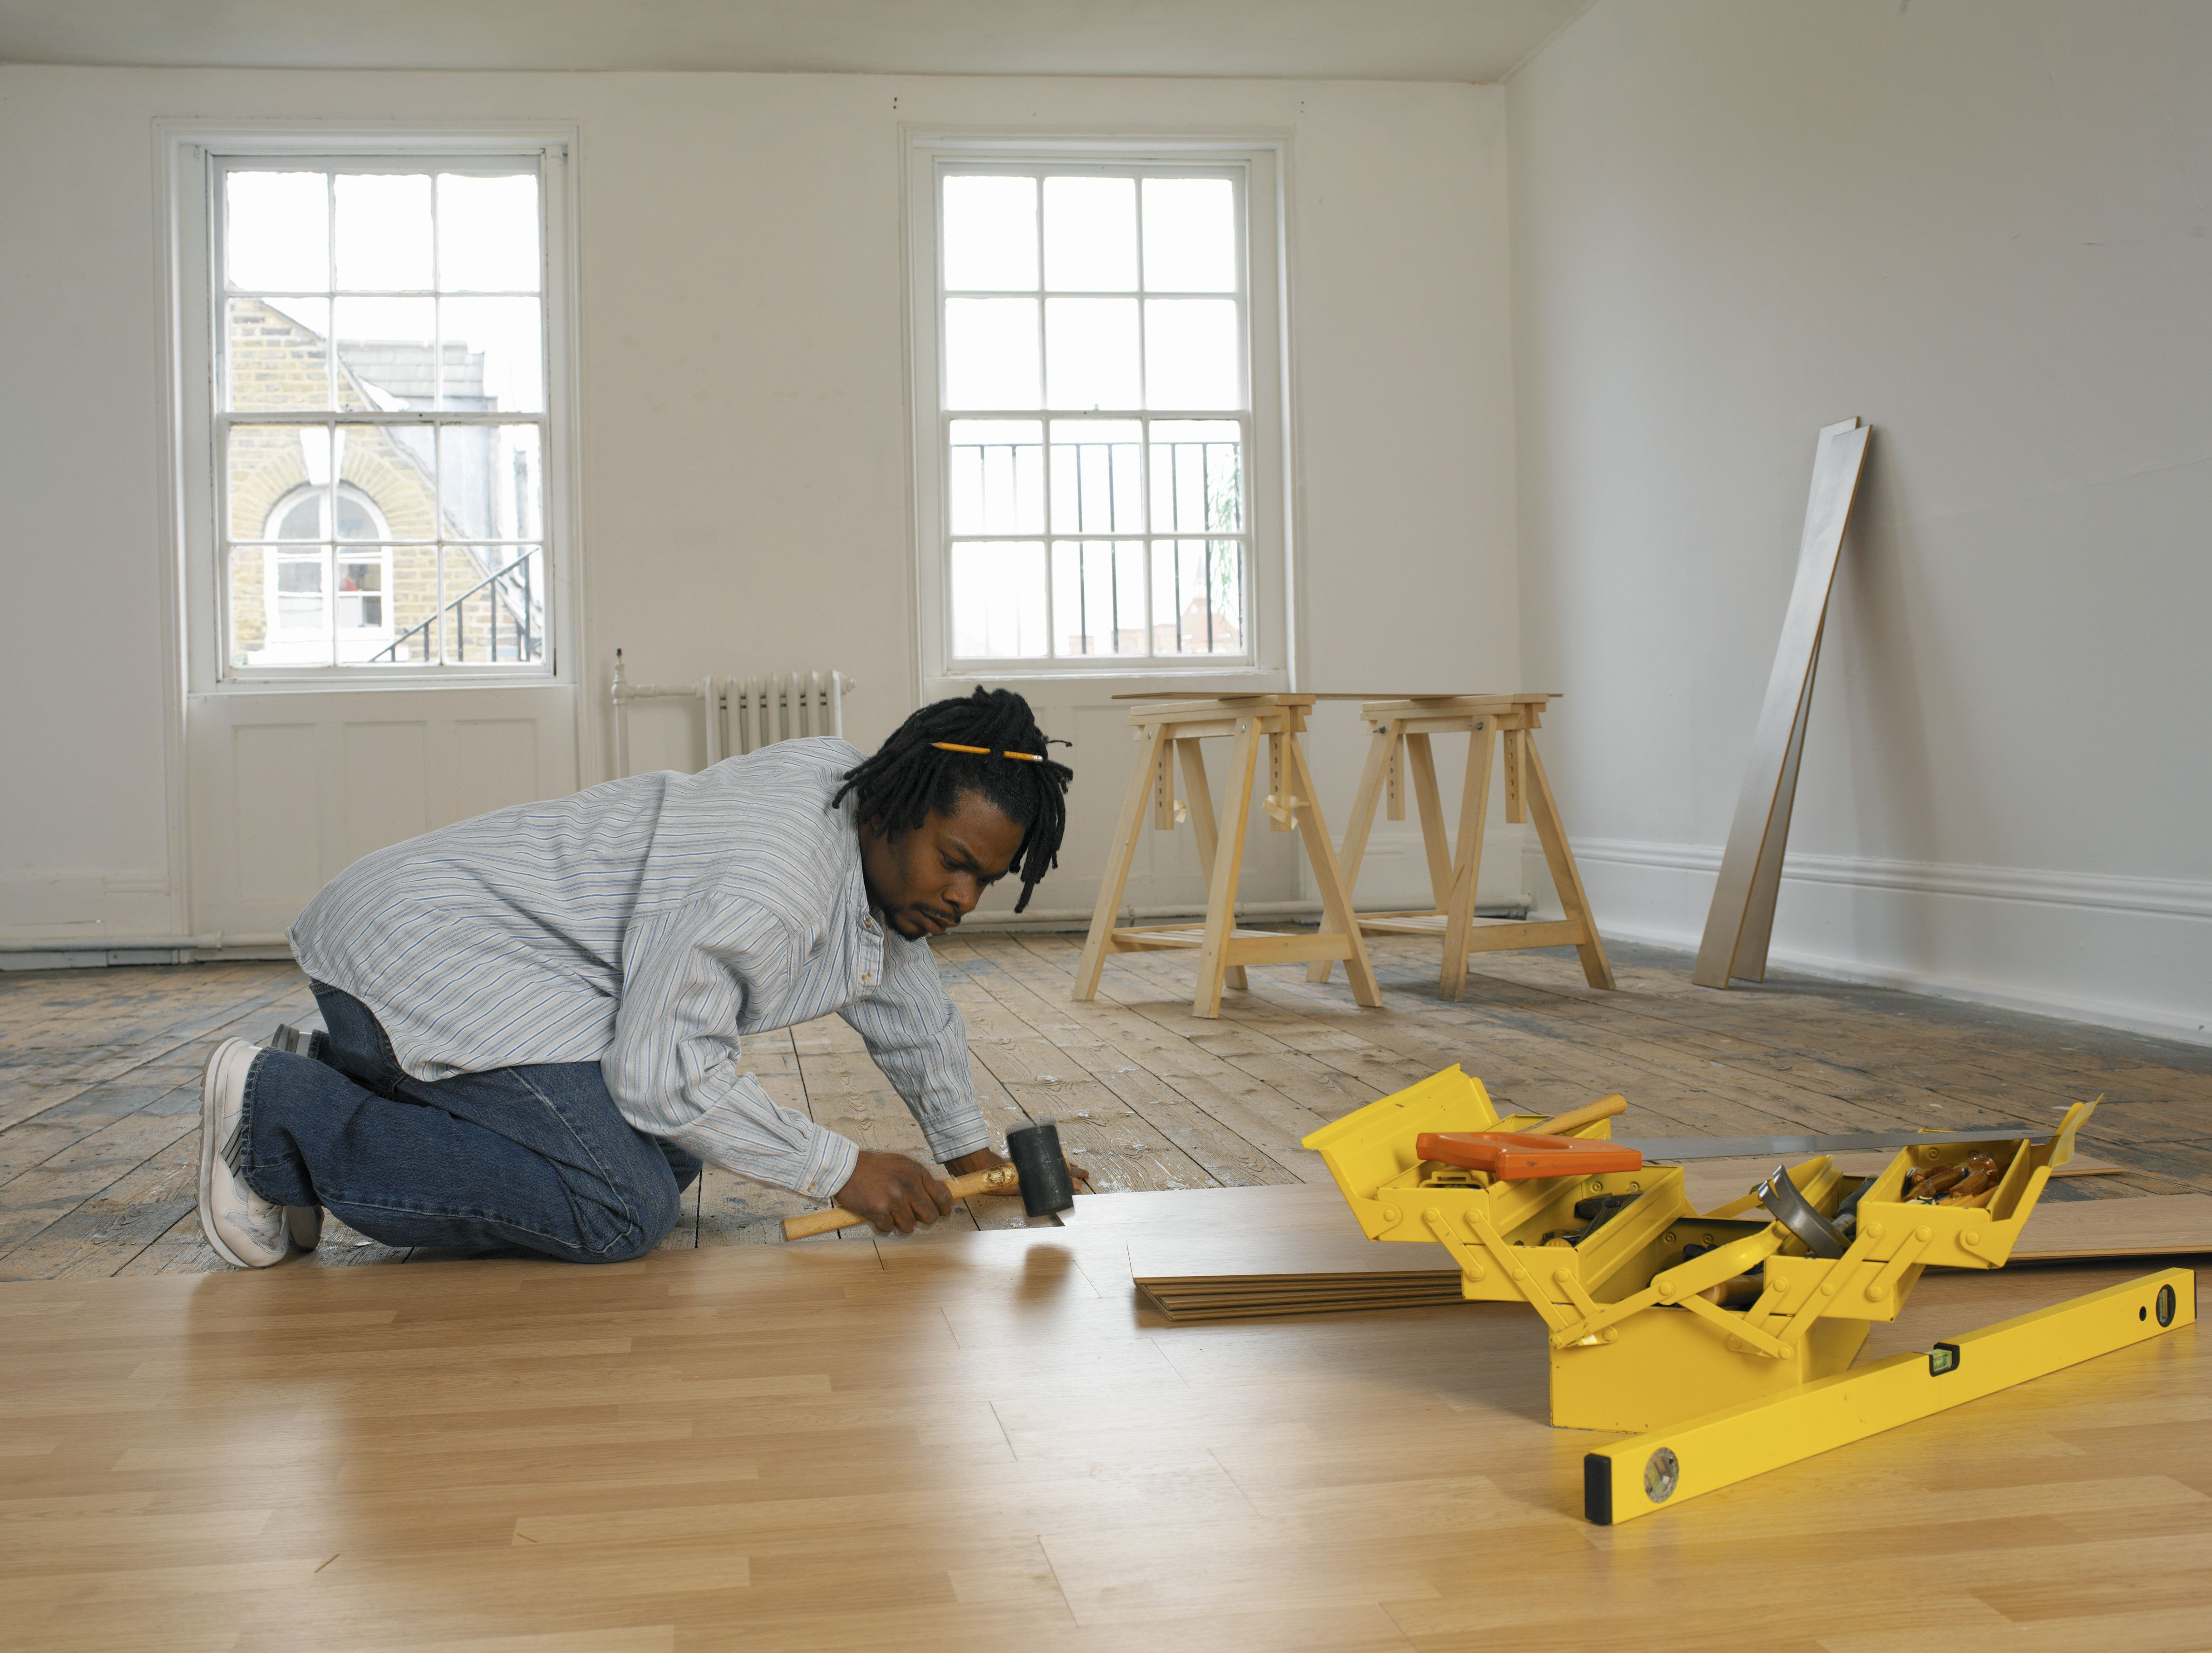 Home Depot Grey Hardwood Flooring Of Major Manufacturing Brands for Laminate Flooring Intended for Laying Laminate Flooring